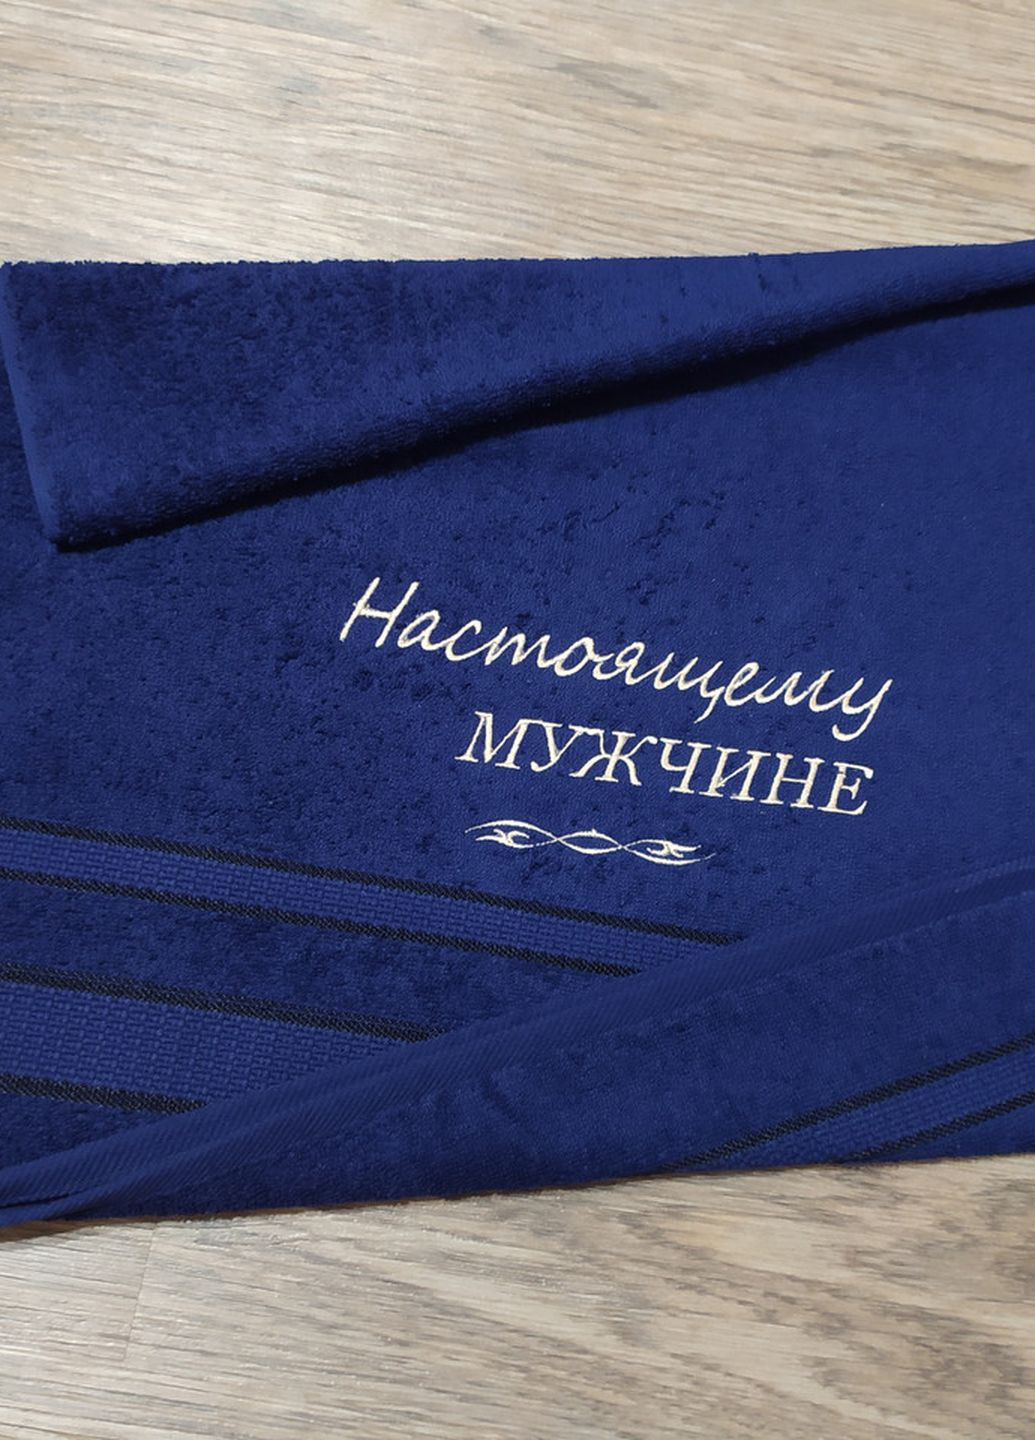 No Brand полотенце c вышивкой махровое банное 70*140 темно-синий настоящему мужчине 10033 однотонный темно-синий производство - Украина